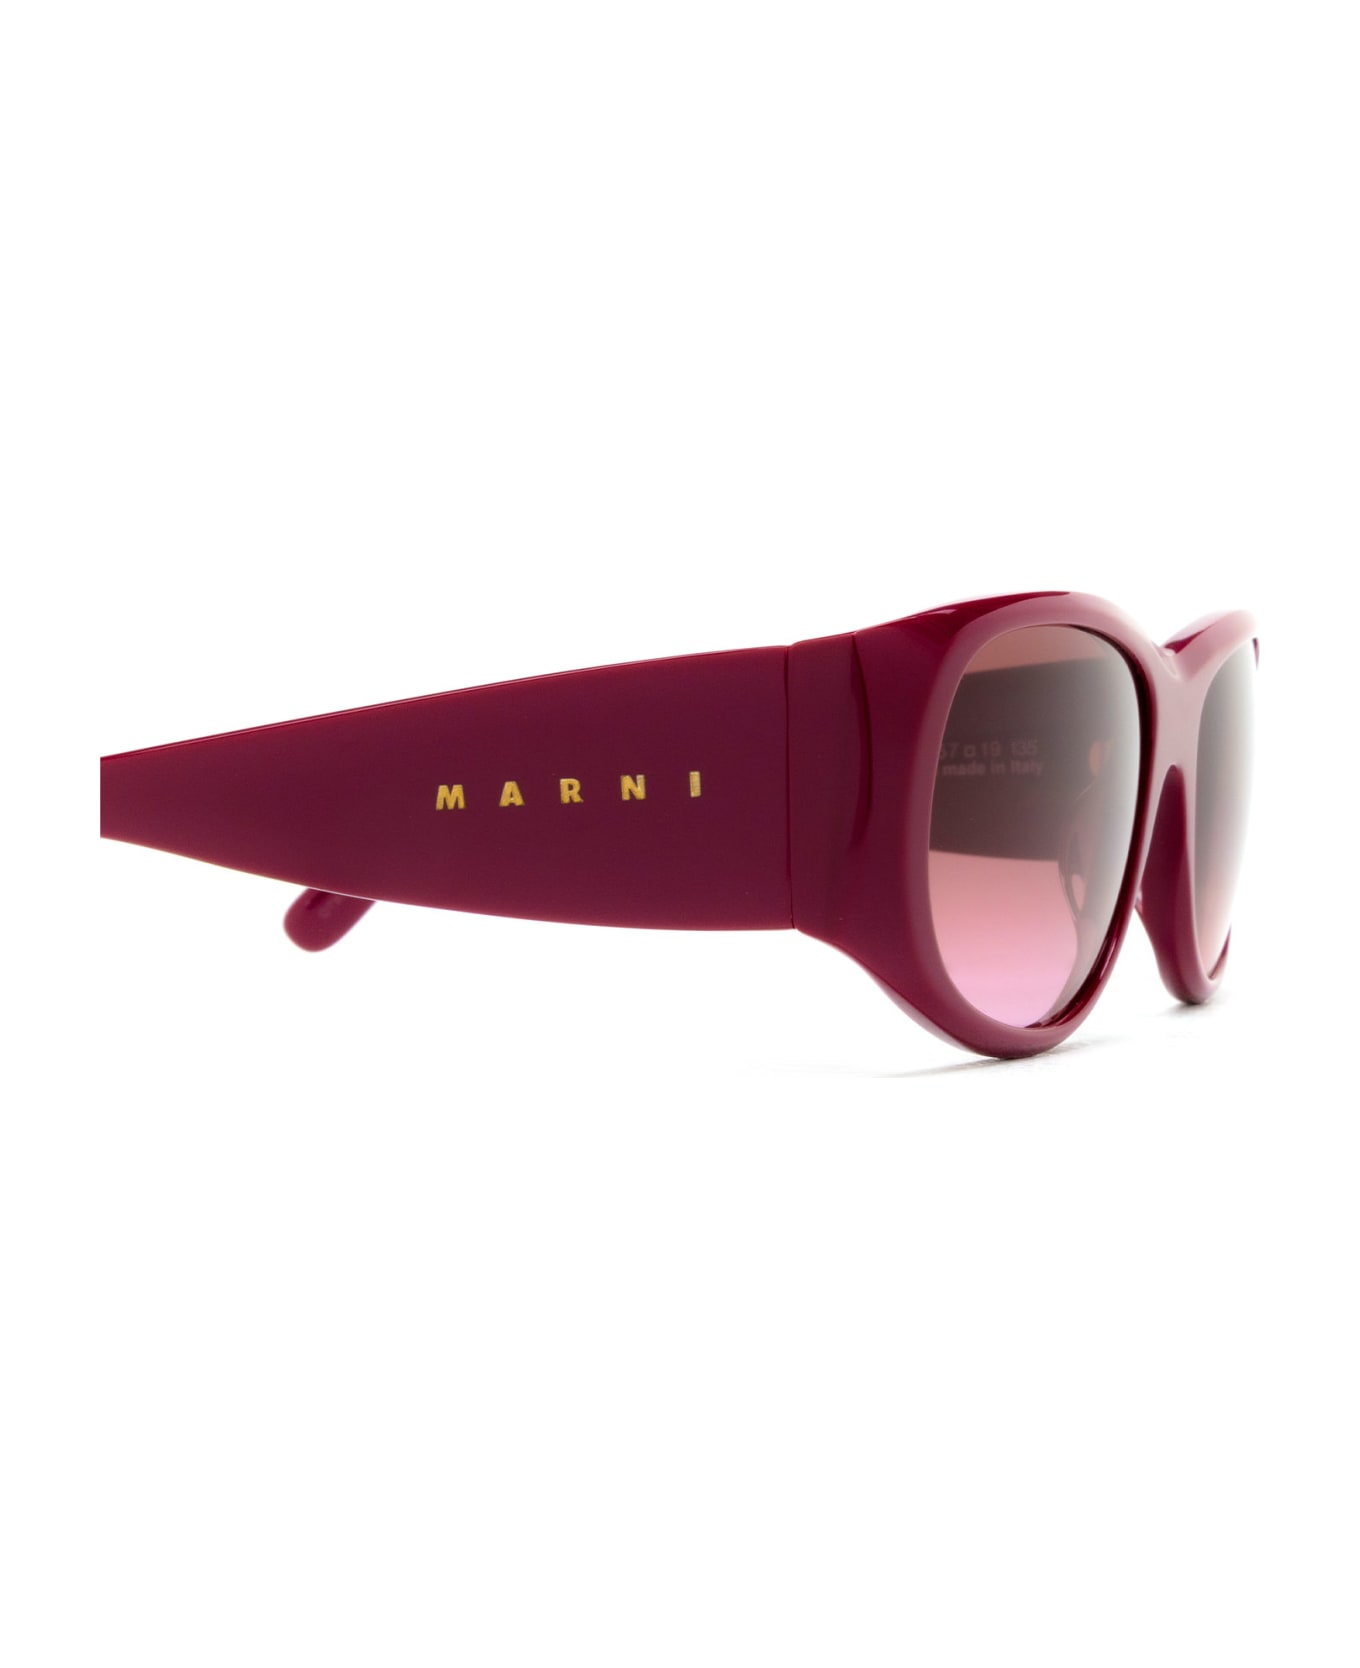 Marni Eyewear Orinoco River Bordeaux Sunglasses - Bordeaux サングラス